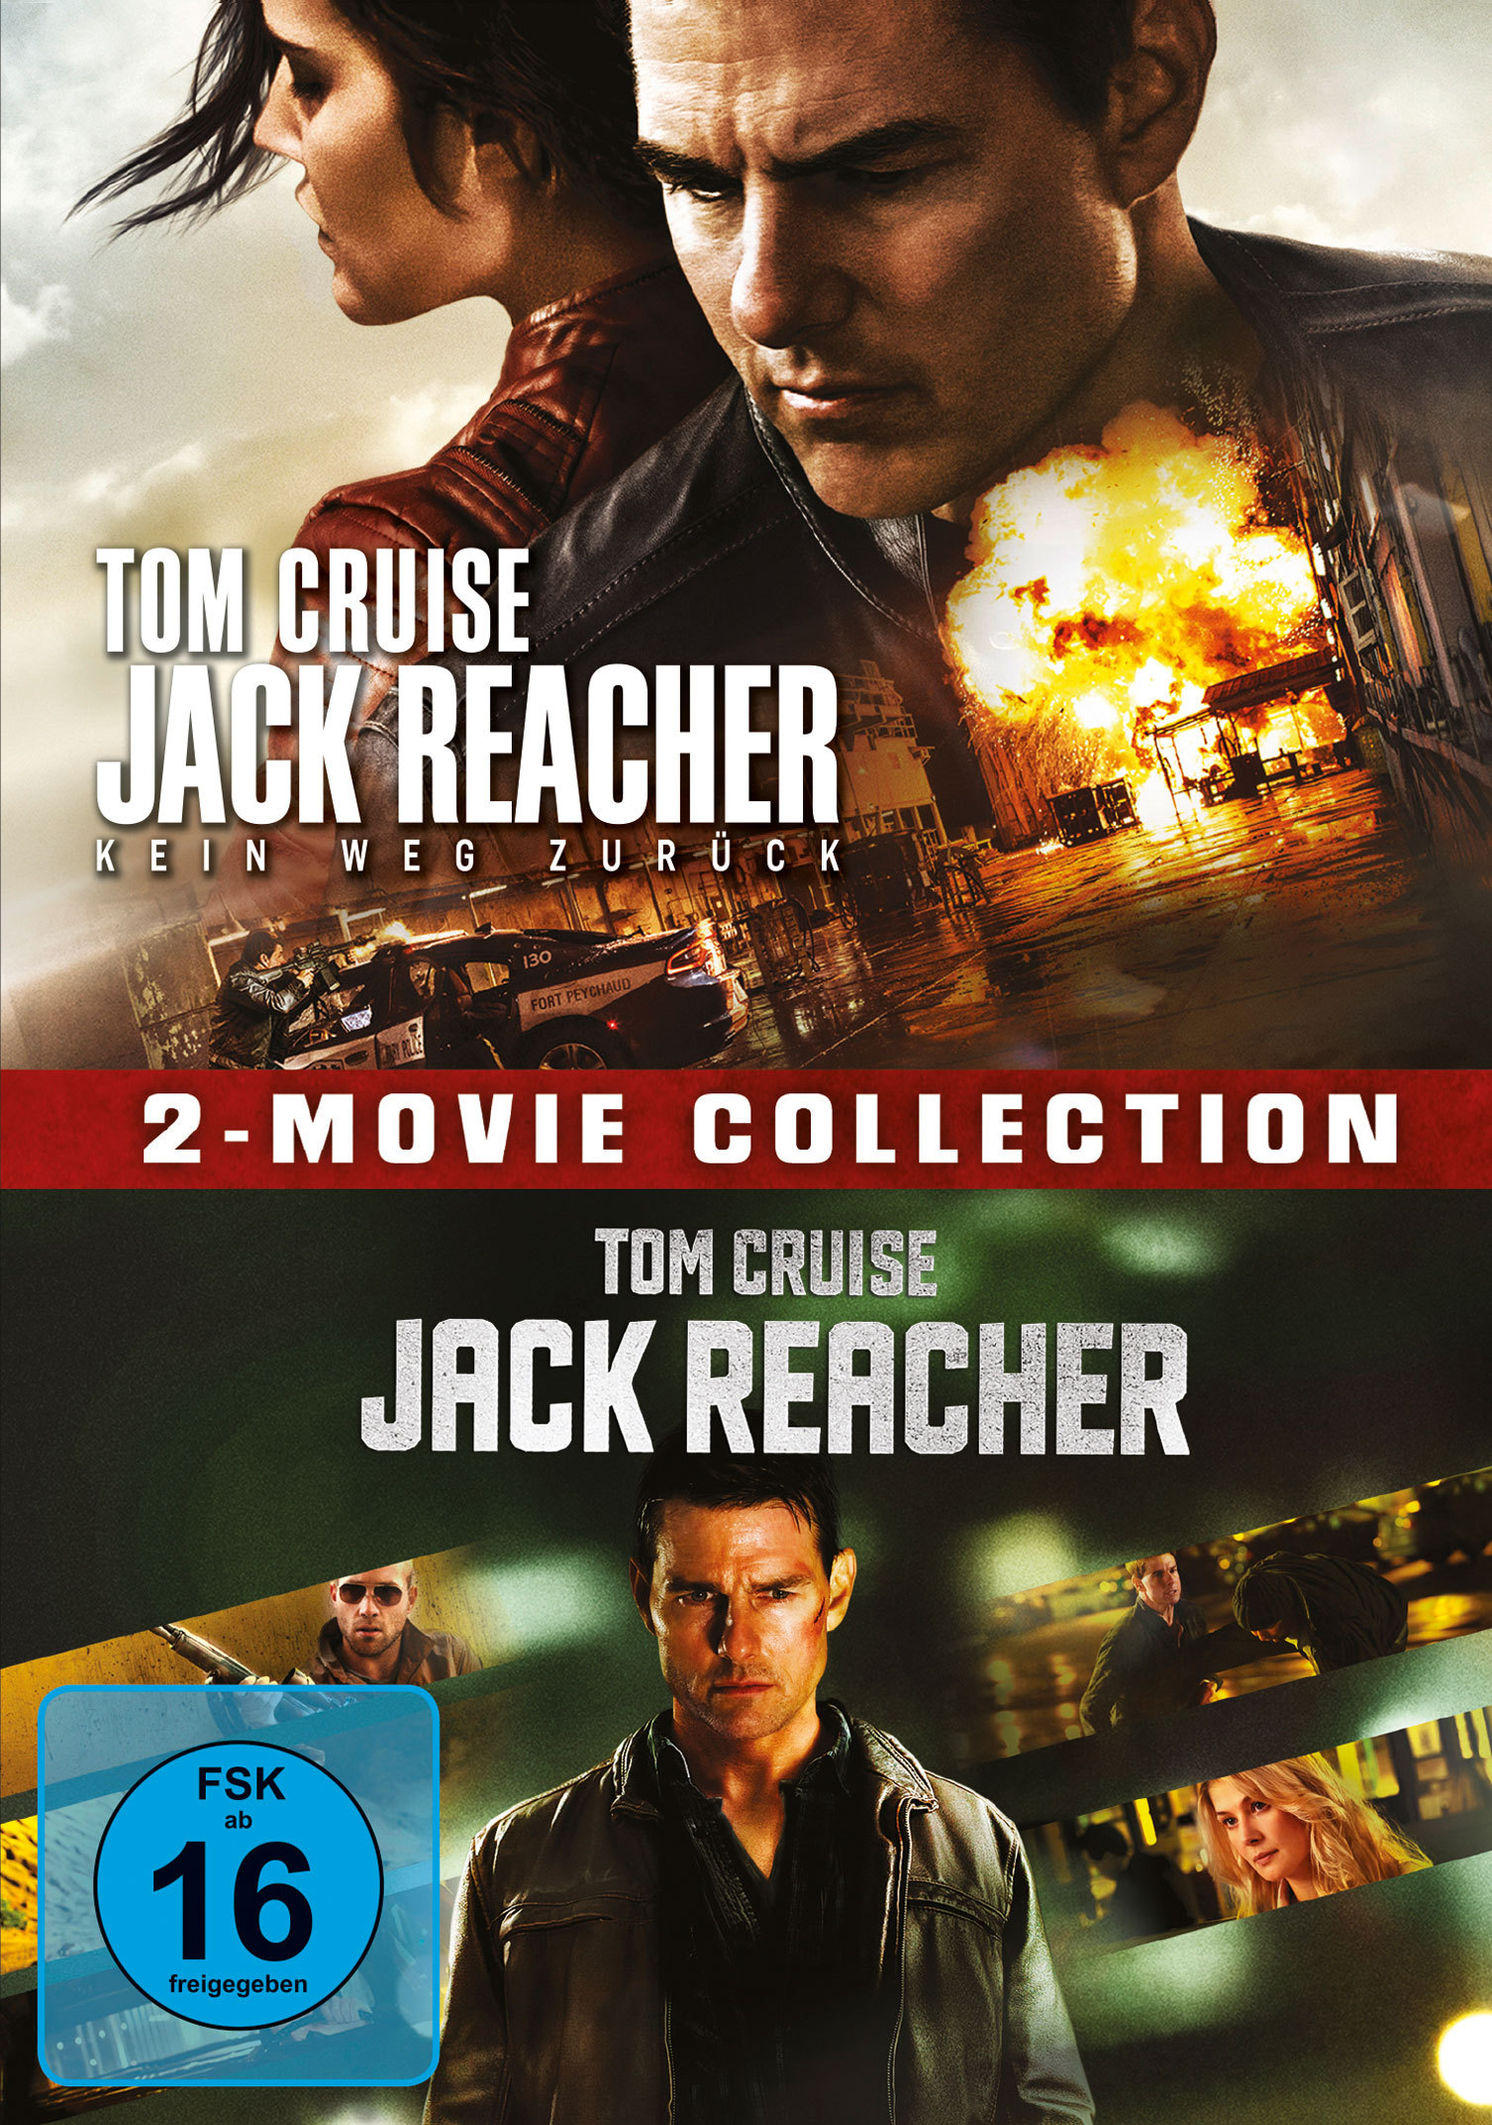 Jack Reacher 1 & 2 DVD jetzt bei Weltbild.de online bestellen